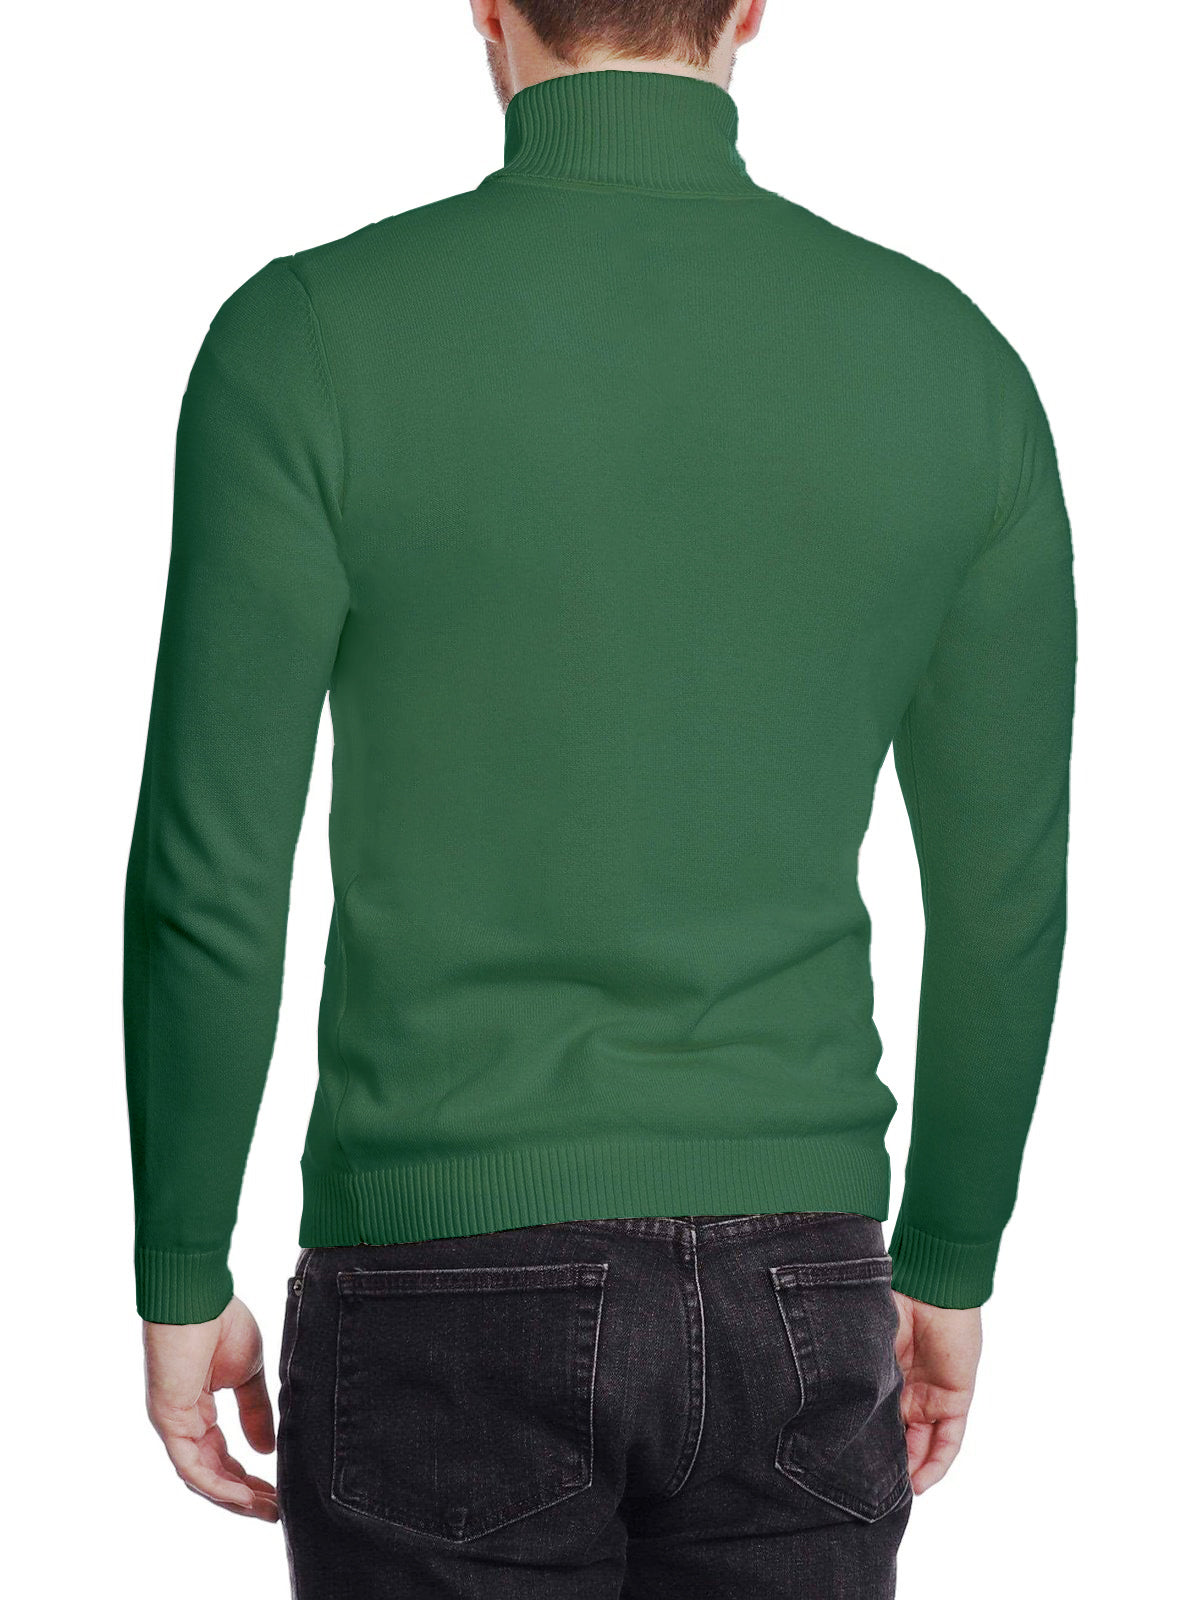 Arthur Black Men's Hunter Green Pullover Cotton Blend Turtleneck Sweater Shirt